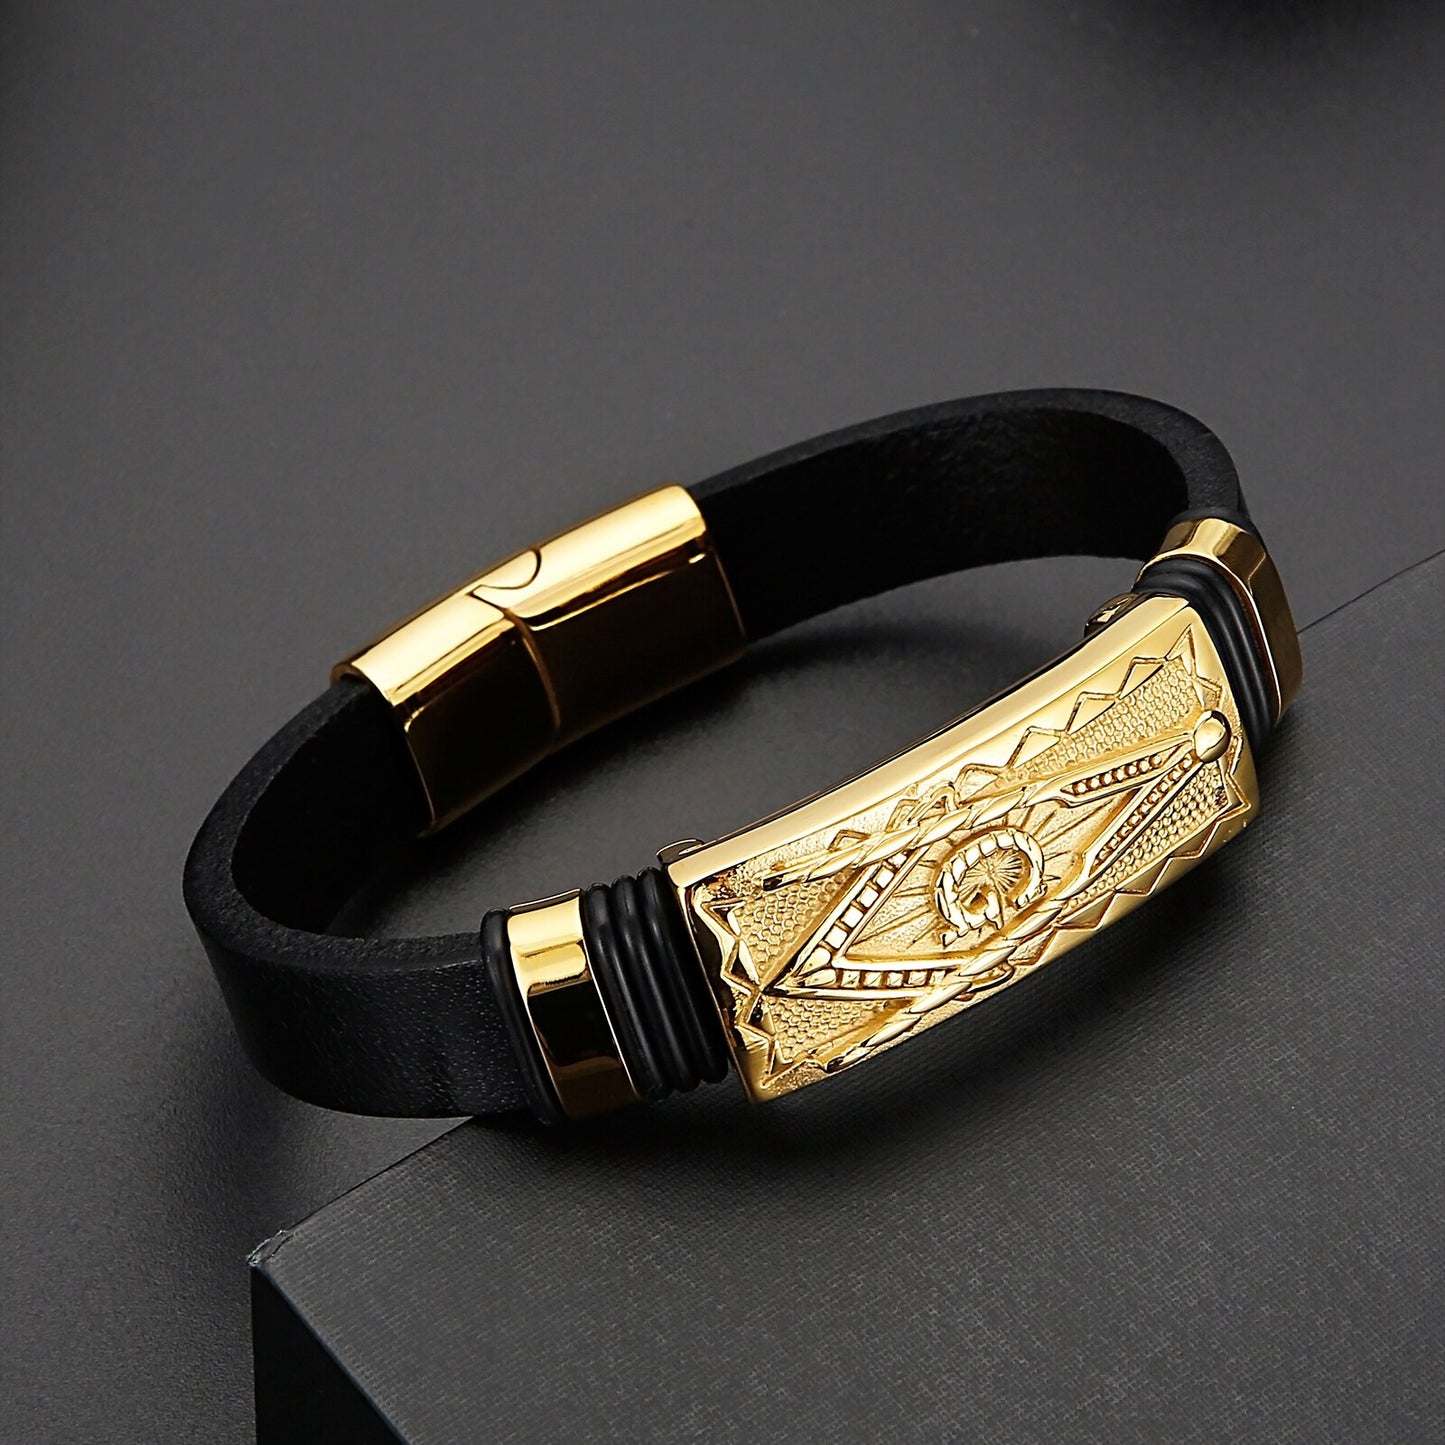 The Big G Illuminati Gold and Leather Cuff Bracelet